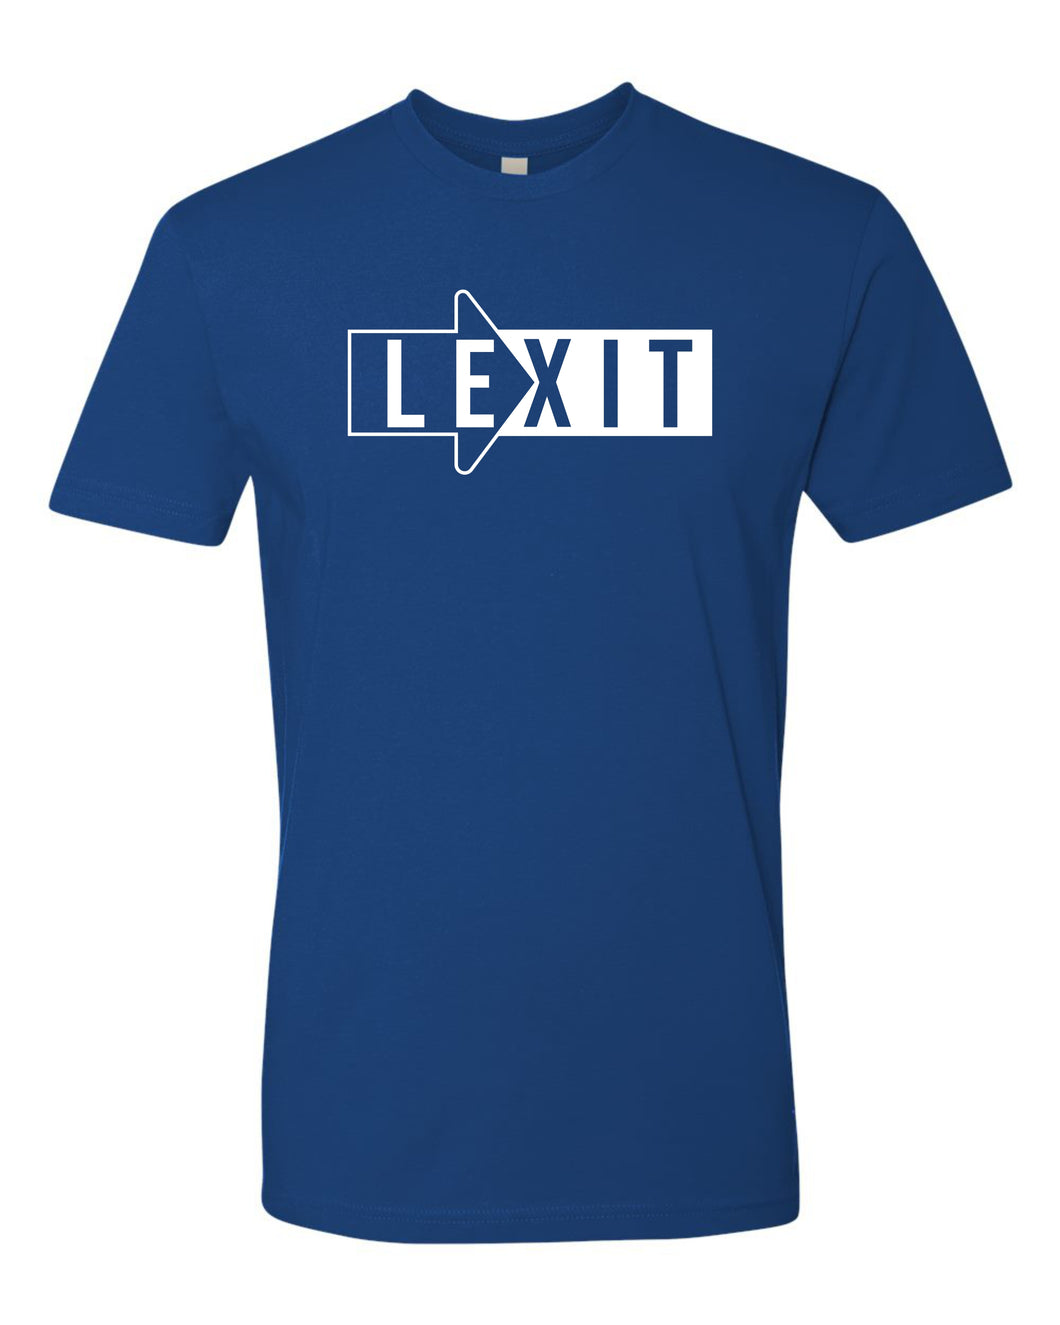 LX-11 Lexit TEAM COLORS Tee Shirt 100% Ringspun Cotton